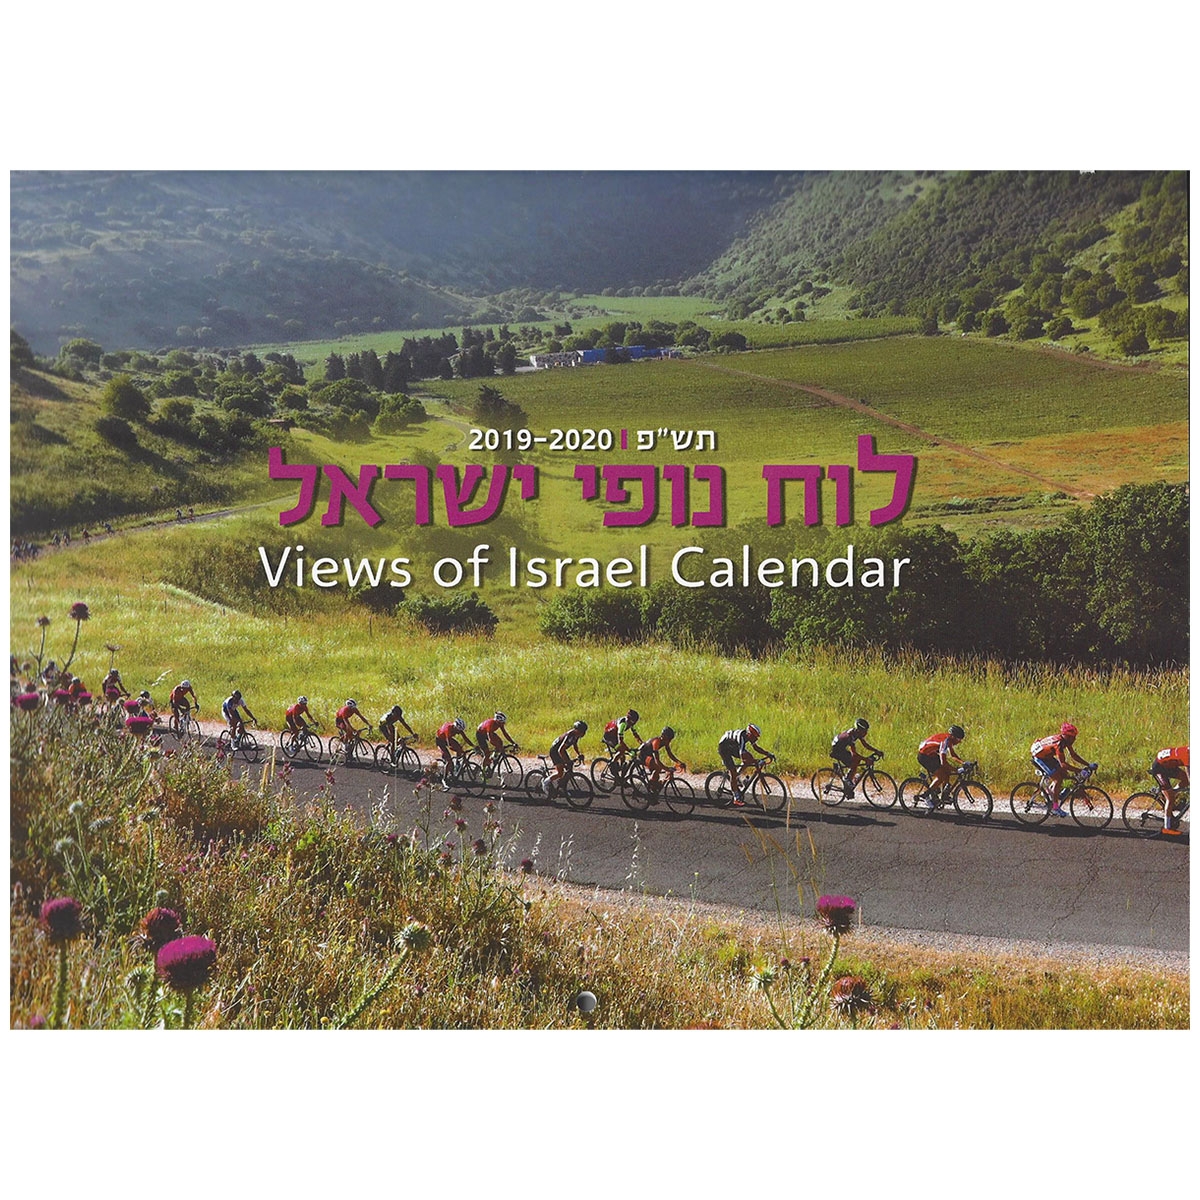 Views of Israel Jewish Calendar 2019-20 - 1